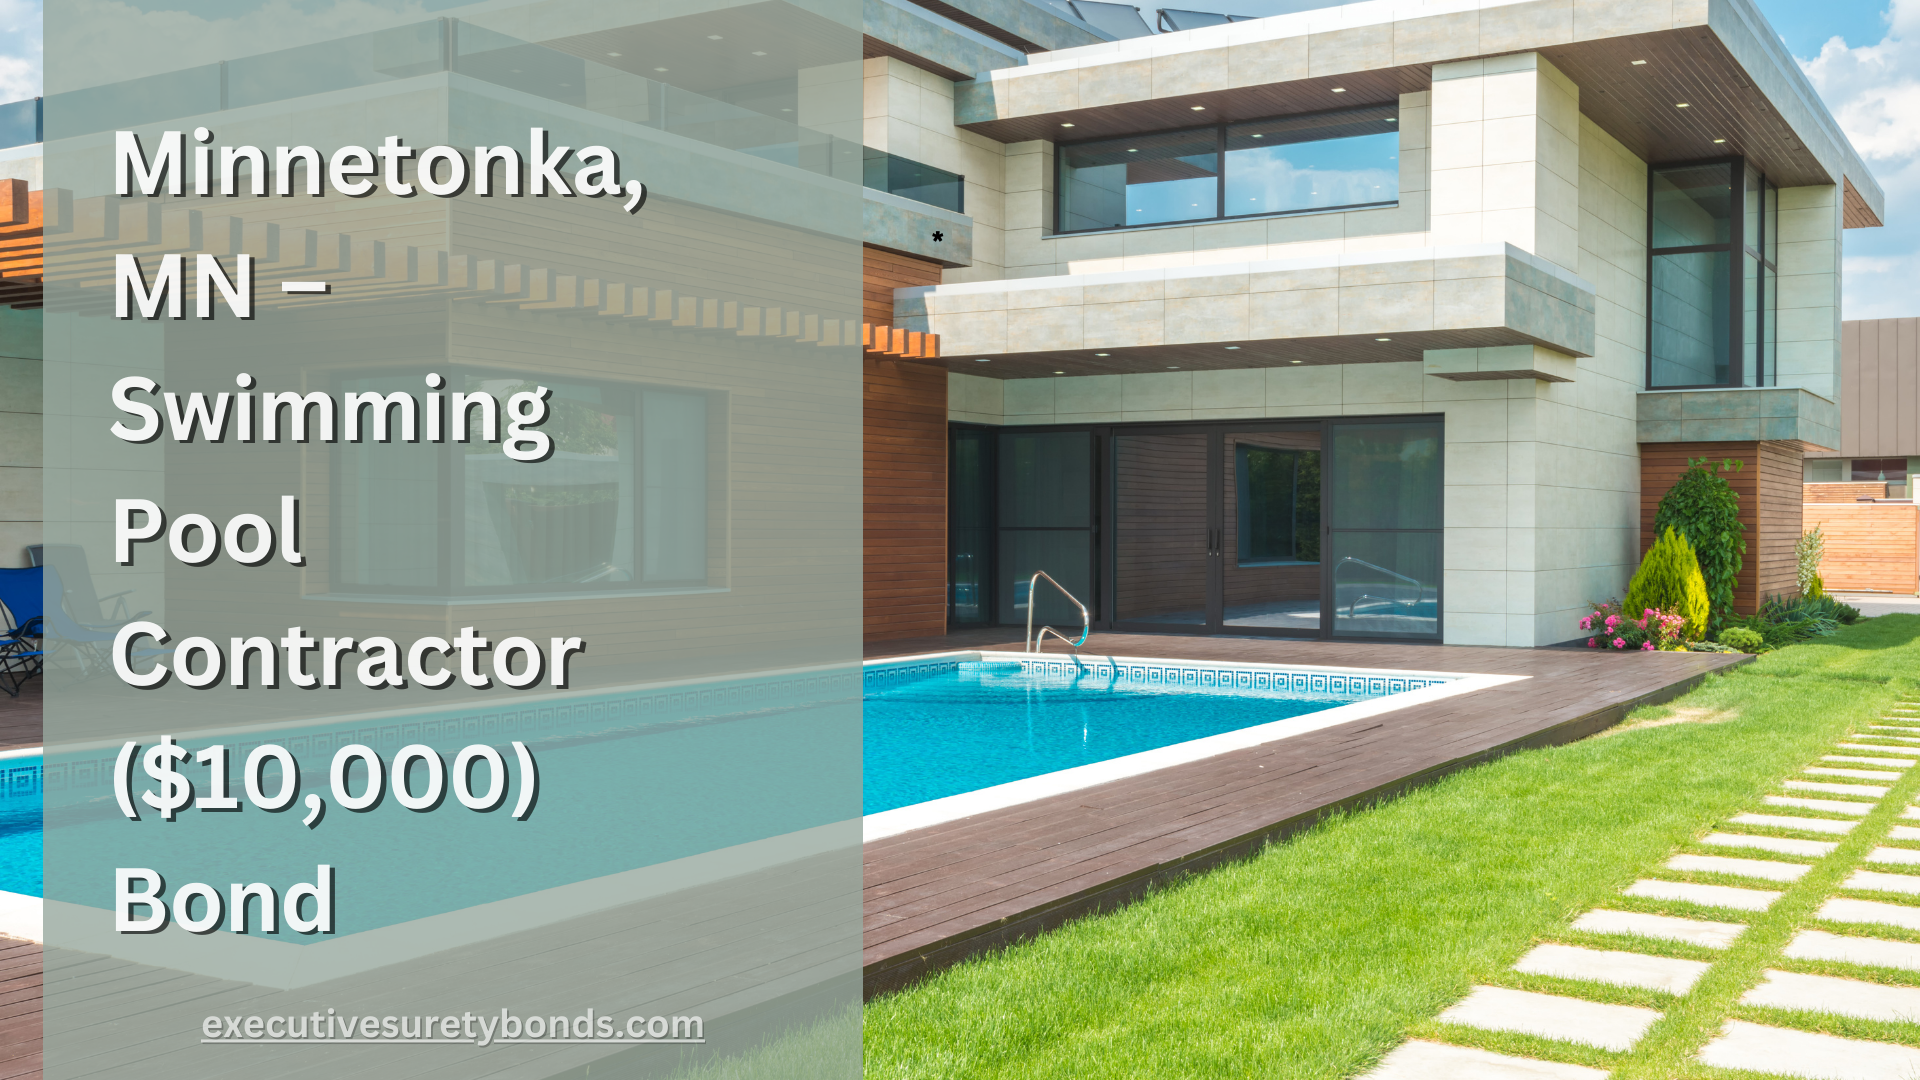 Minnetonka, MN – Swimming Pool Contractor ($10,000) Bond